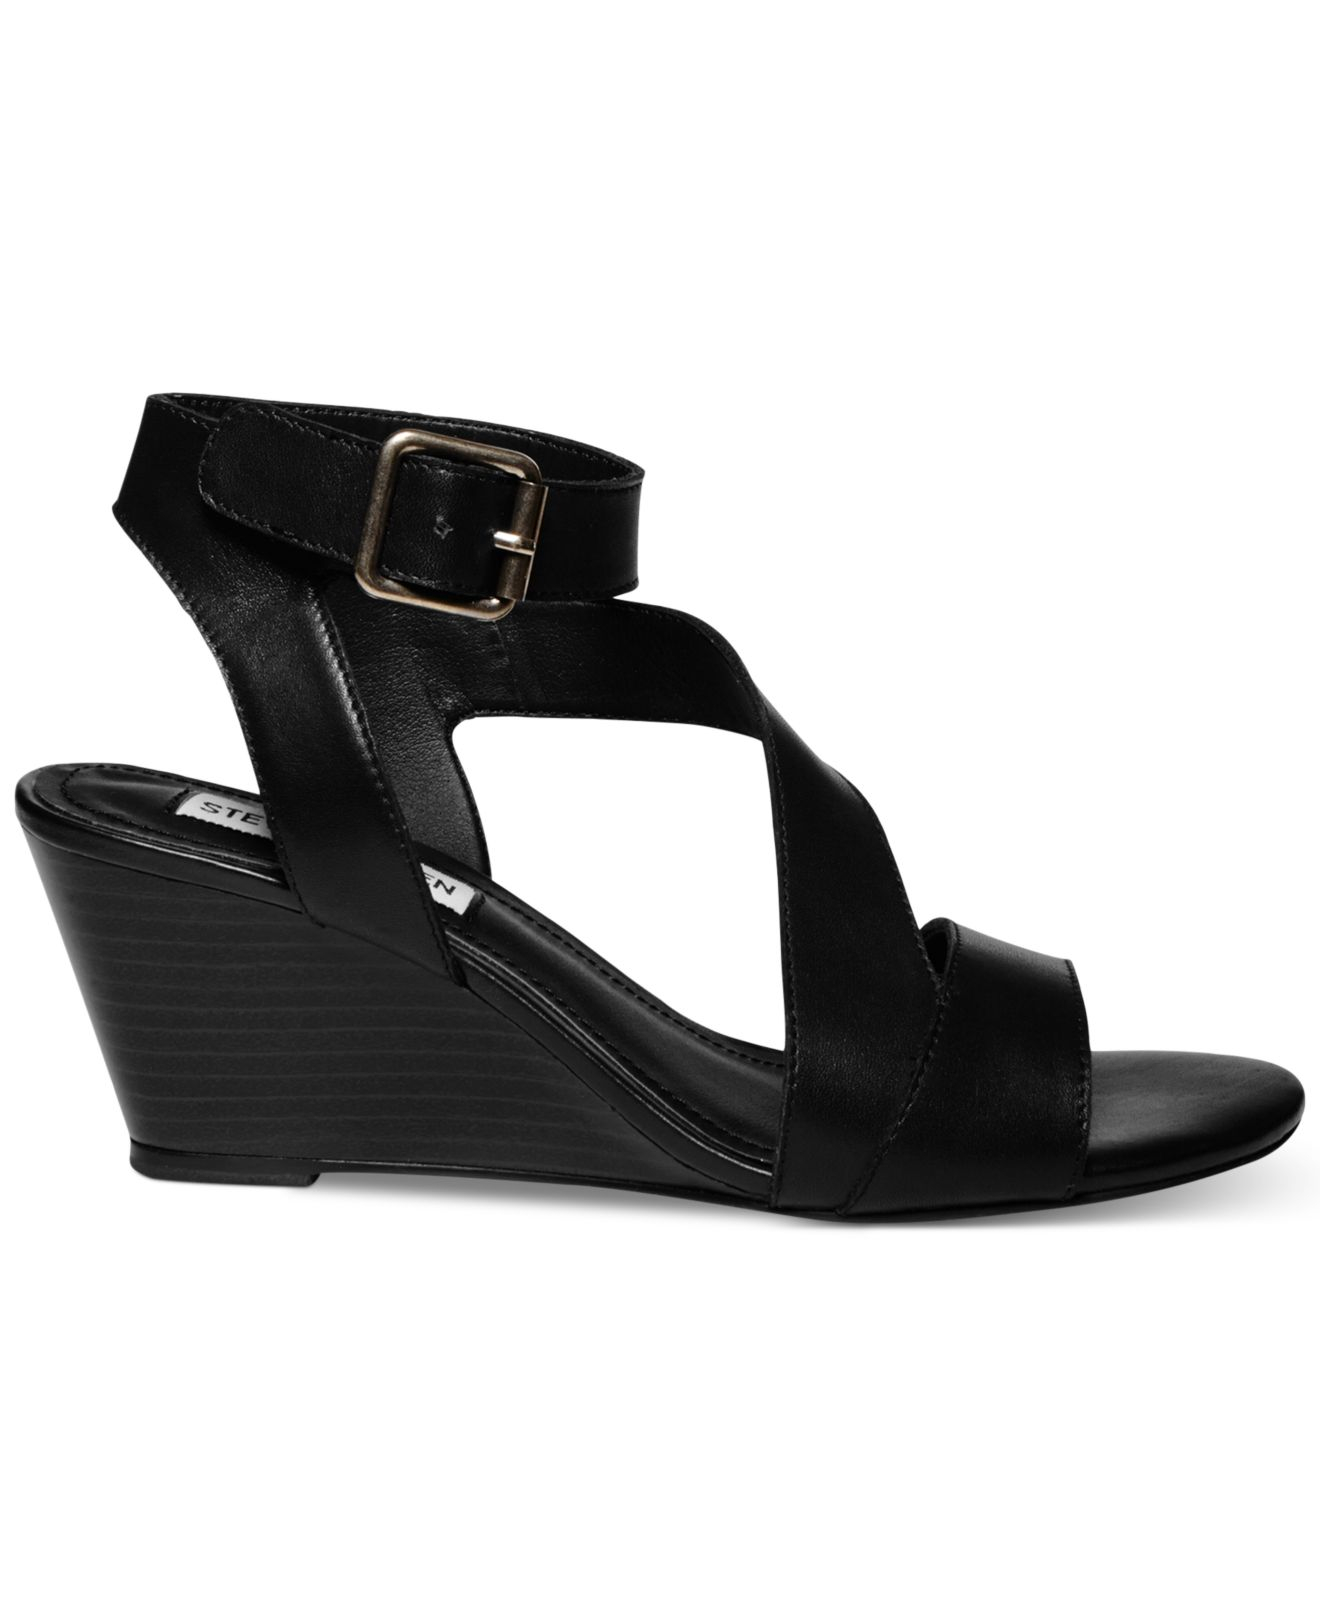 Steve Madden Women'S Stipend Wedge Sandals in Black (Black Leather) | Lyst